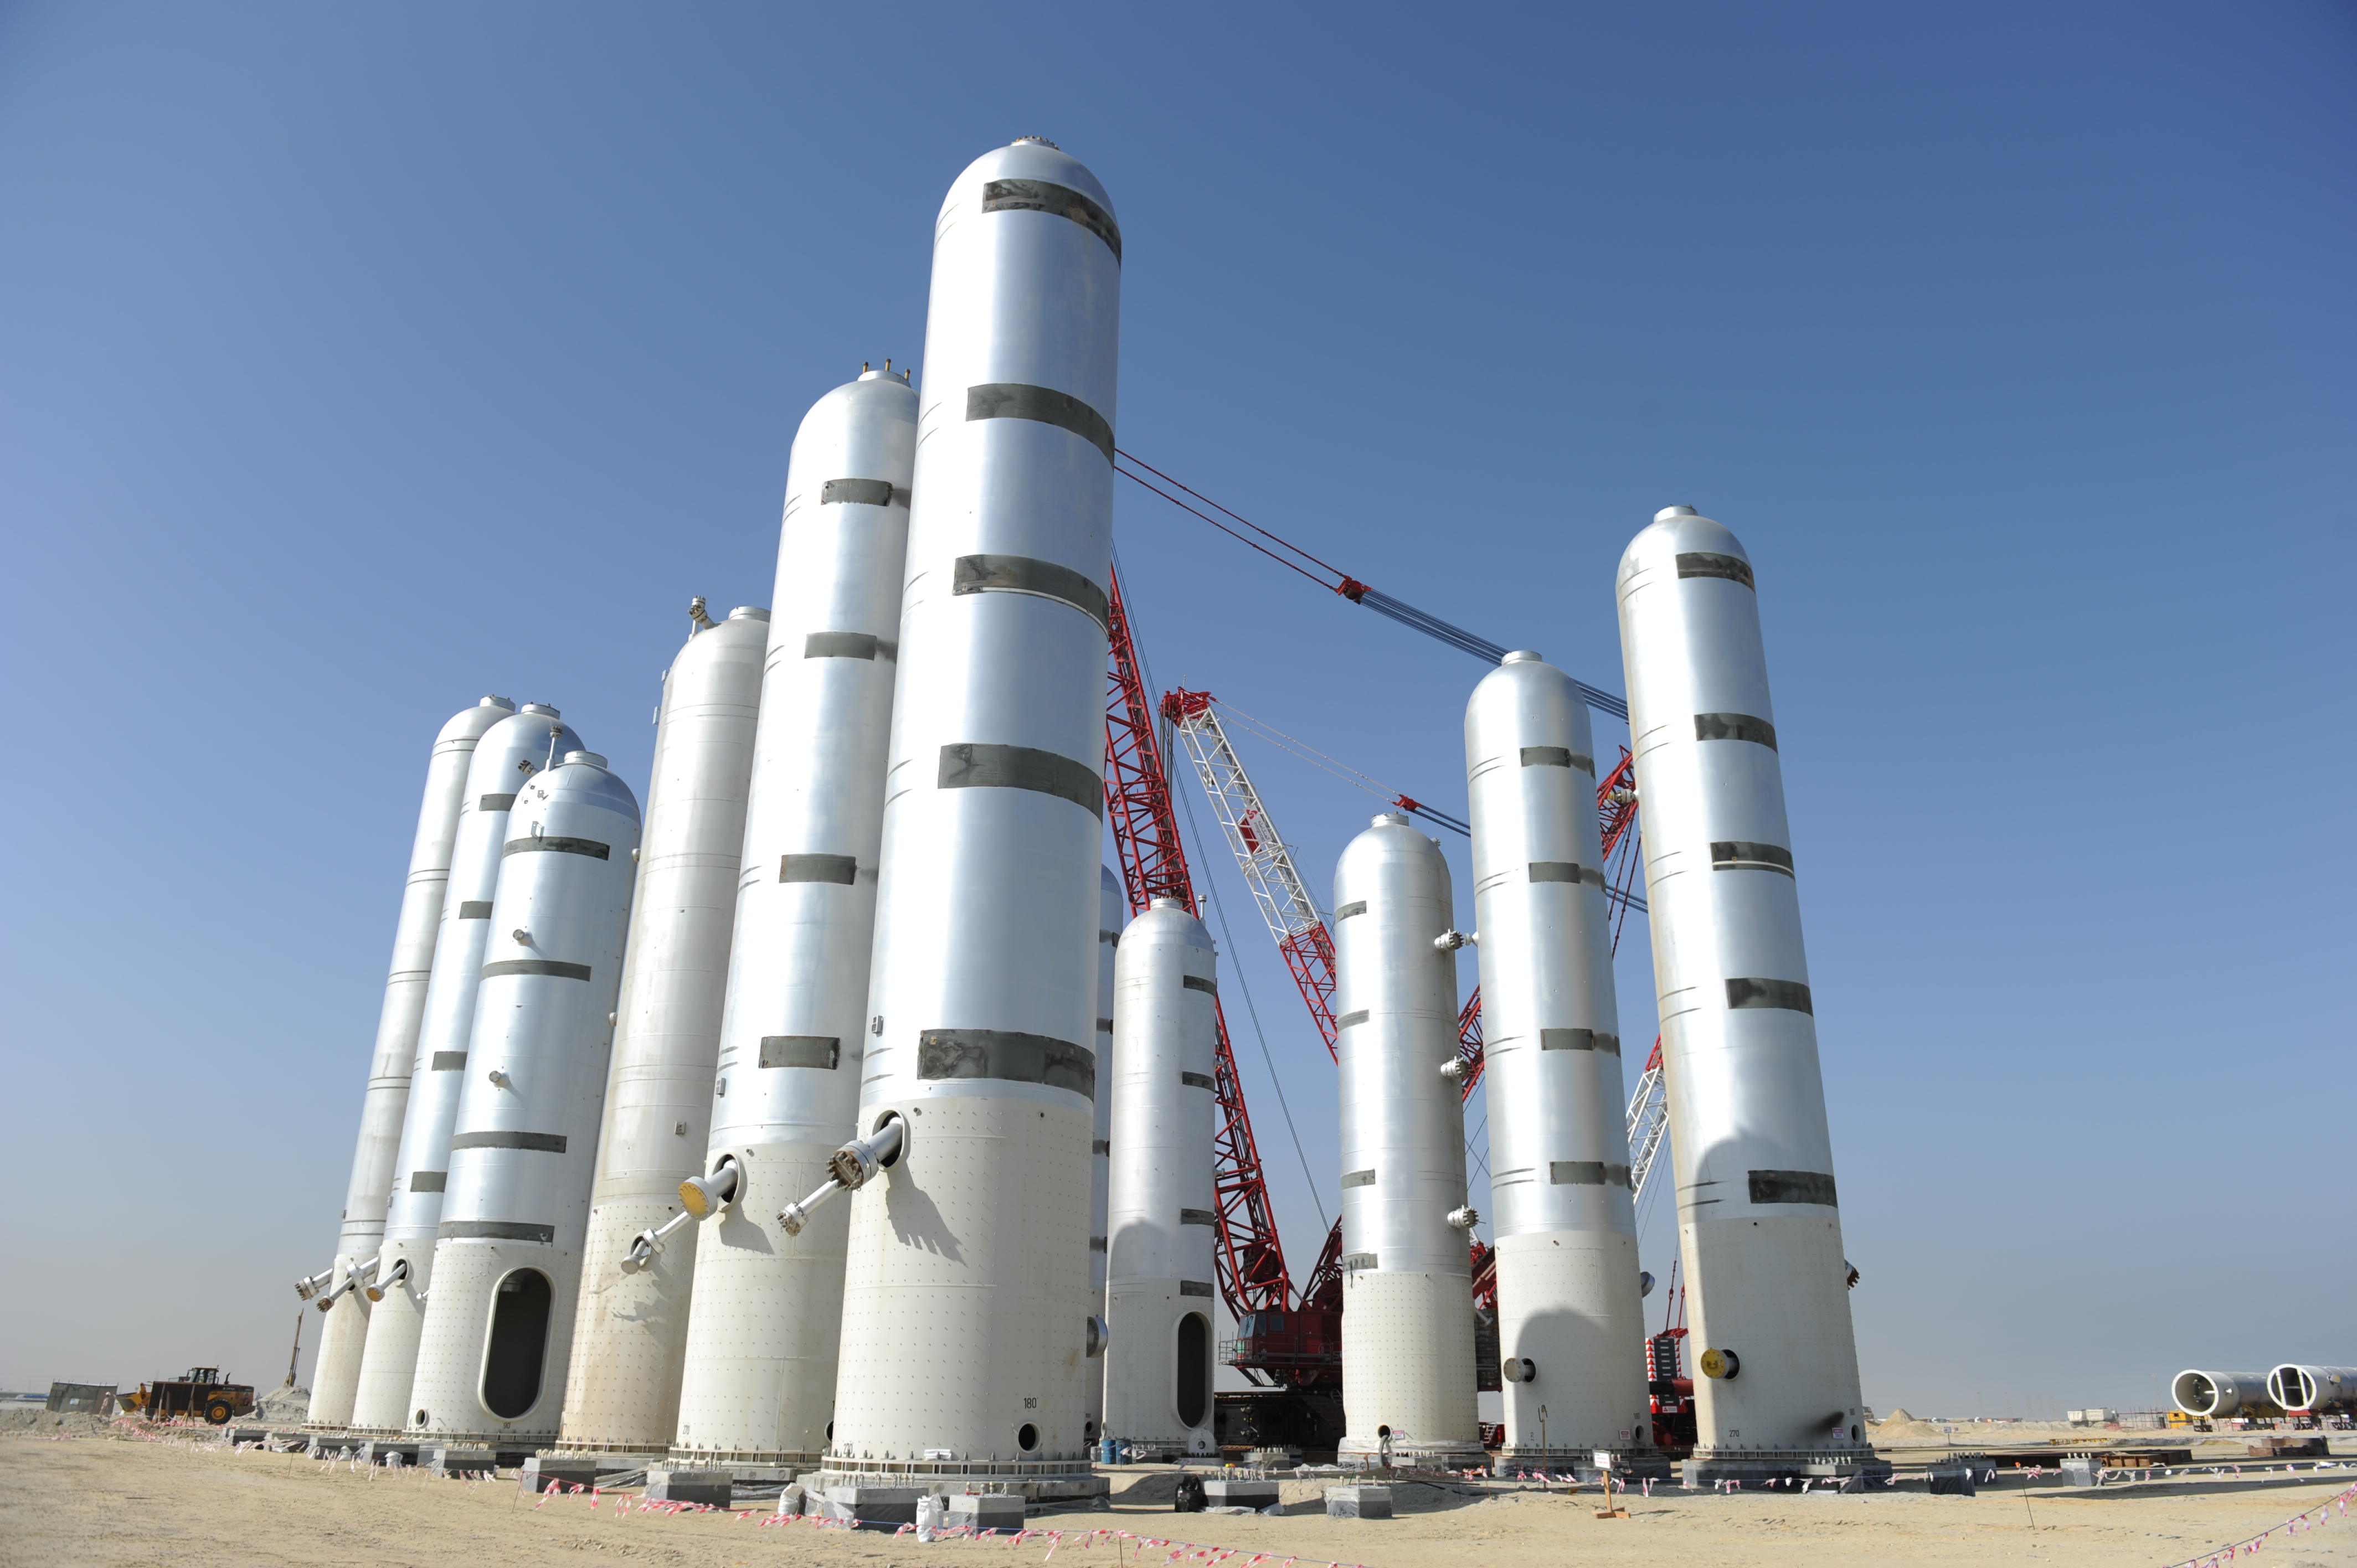 The new Al-Zour refinery project